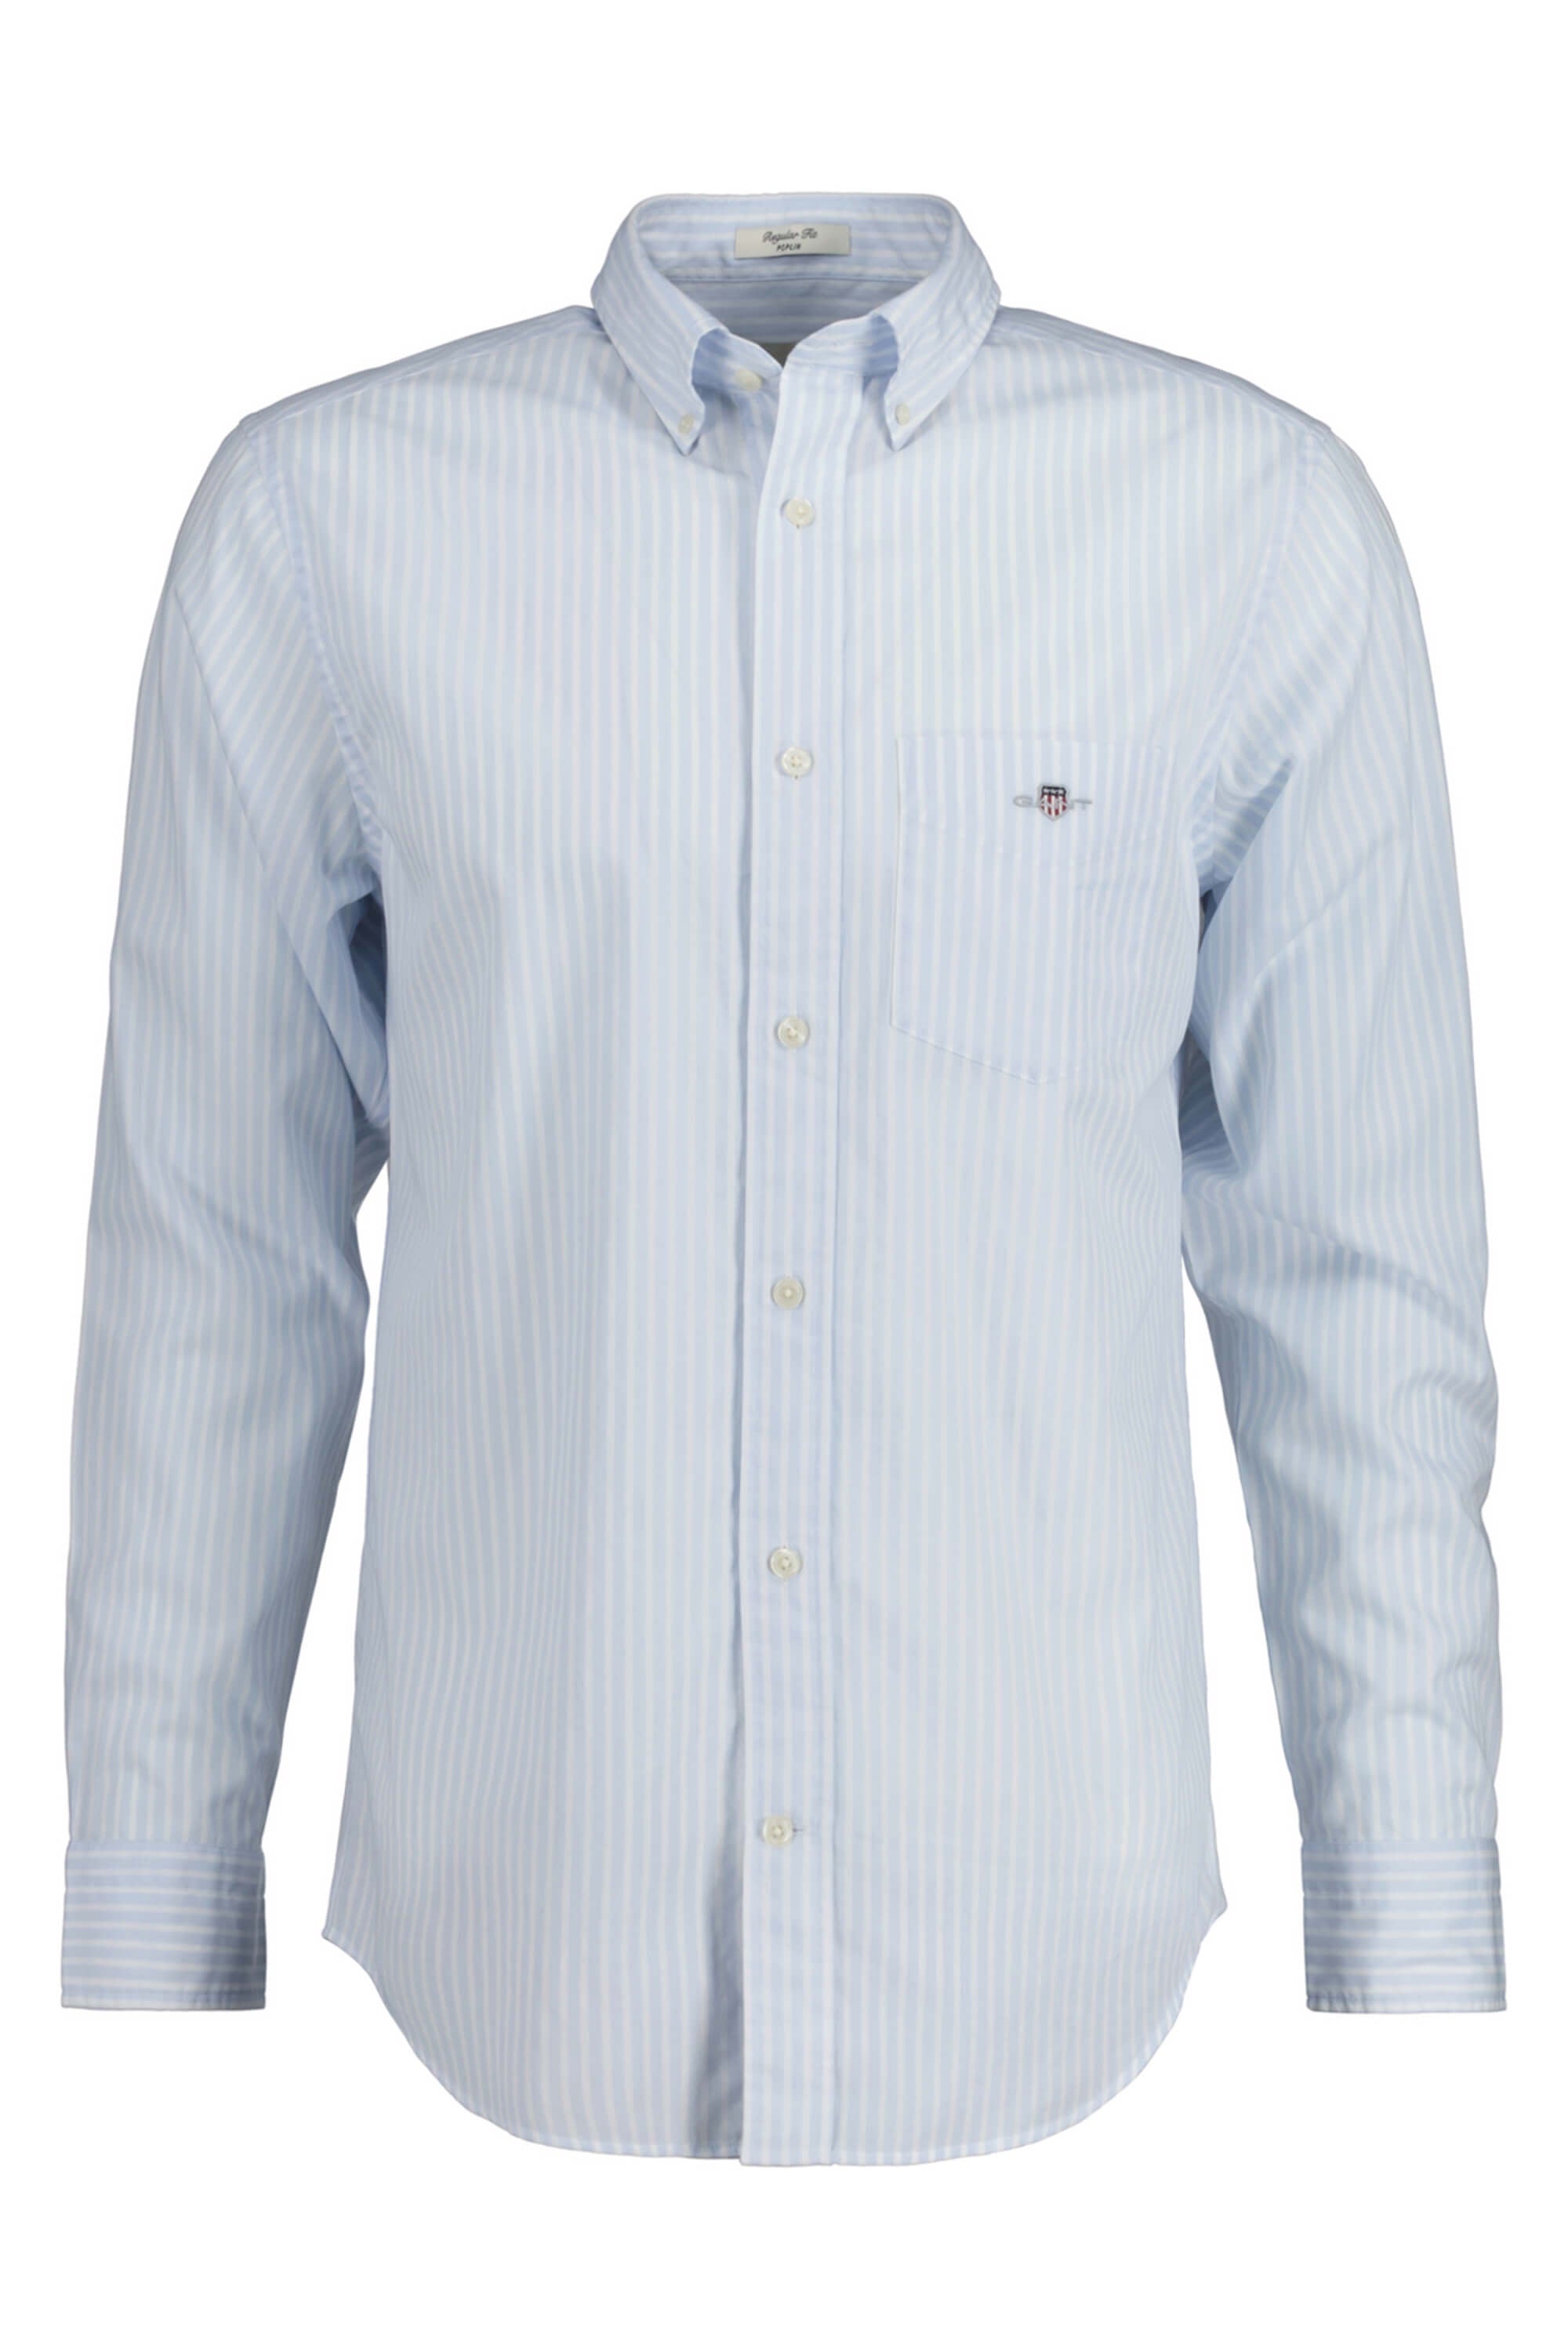 Gant Poplin Stripe Shirt Blue